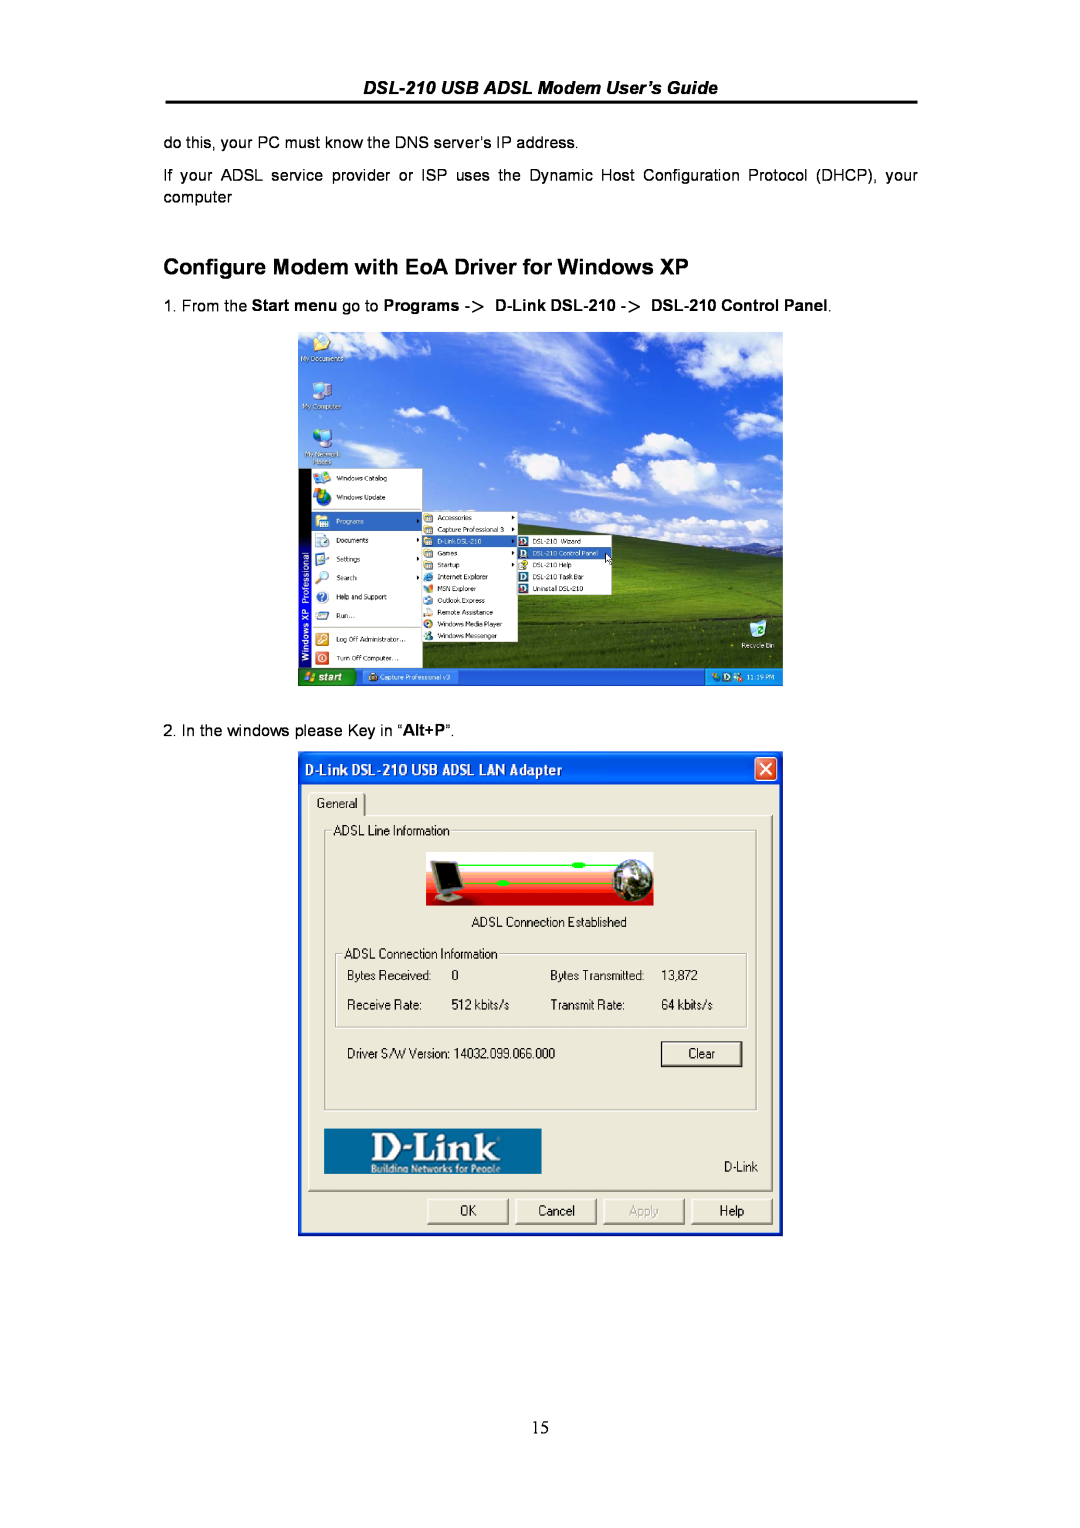 D-Link manual Configure Modem with EoA Driver for Windows XP, DSL-210 USB ADSL Modem User’s Guide 